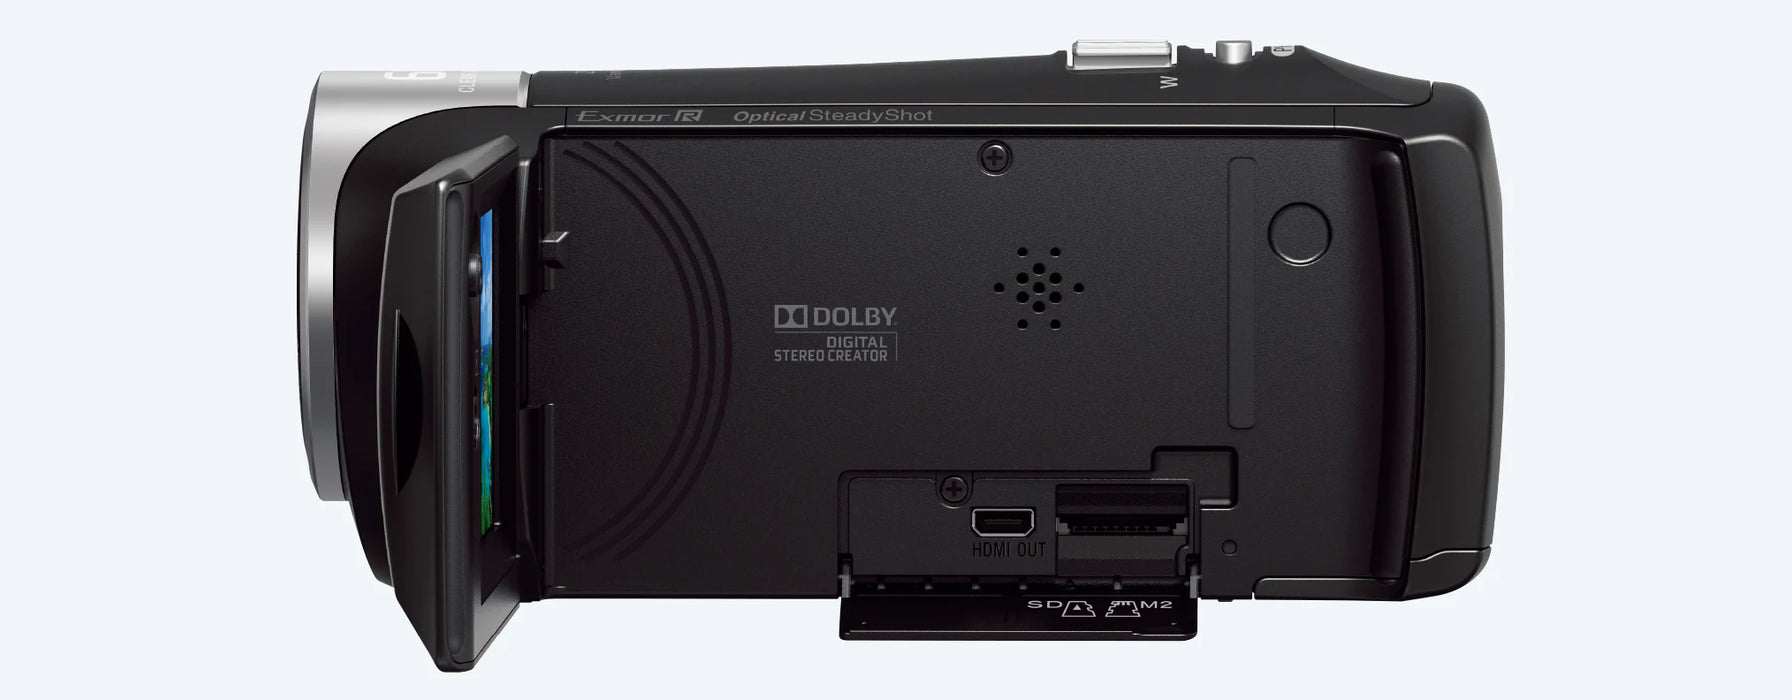 Sony HDR-CX405 Handycam Camcorder